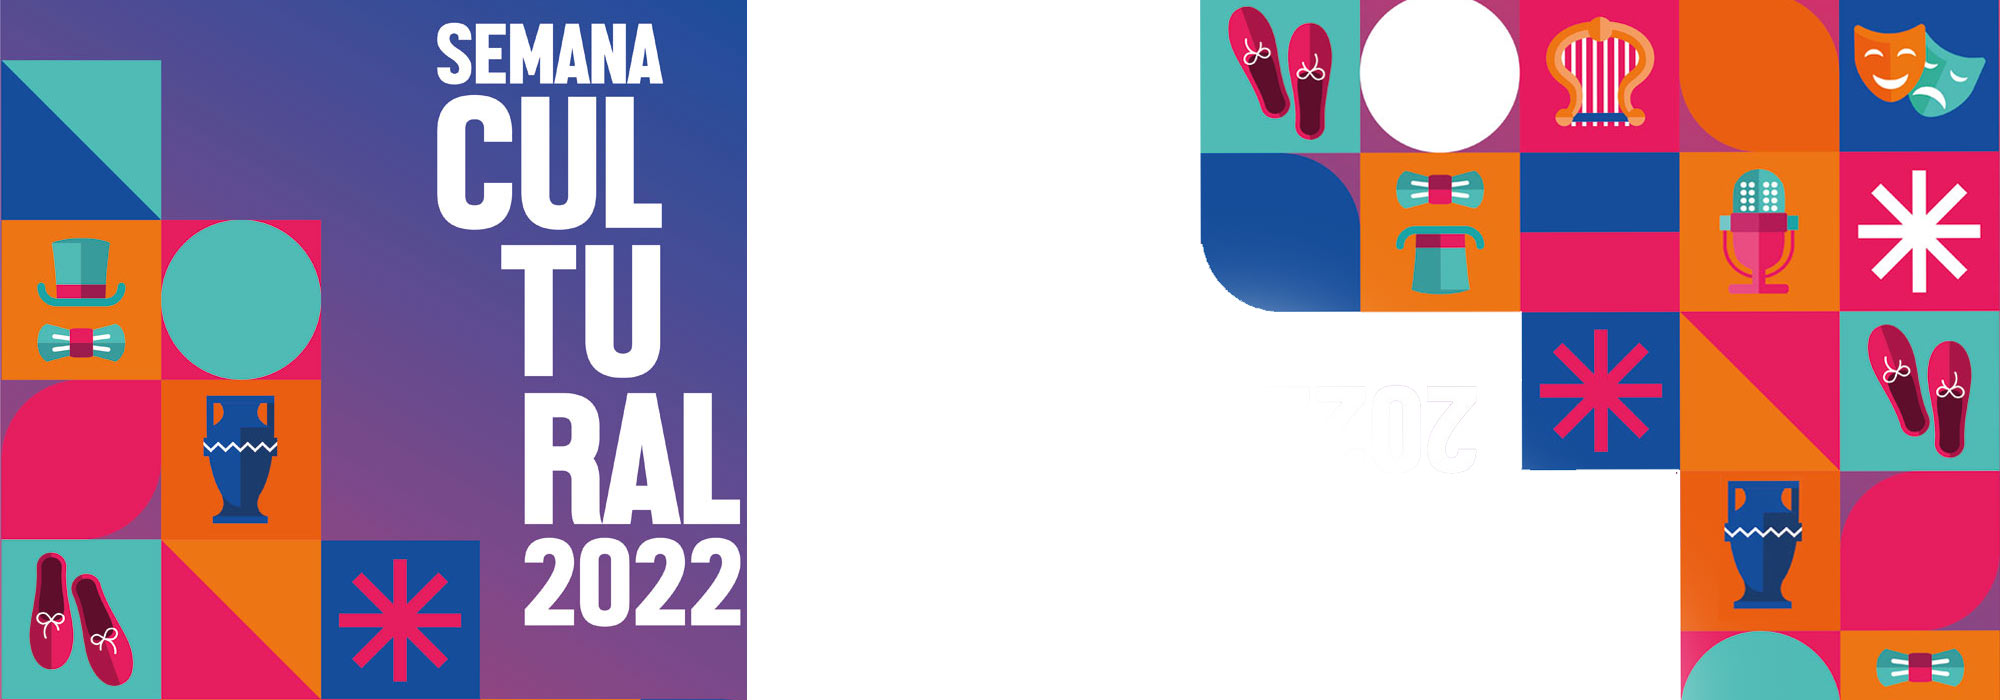 La Semana Cultural 2022 trae a Manzanares El Real mucha música, títeres, talleres circenses, danza, visitas guiadas, teatro…